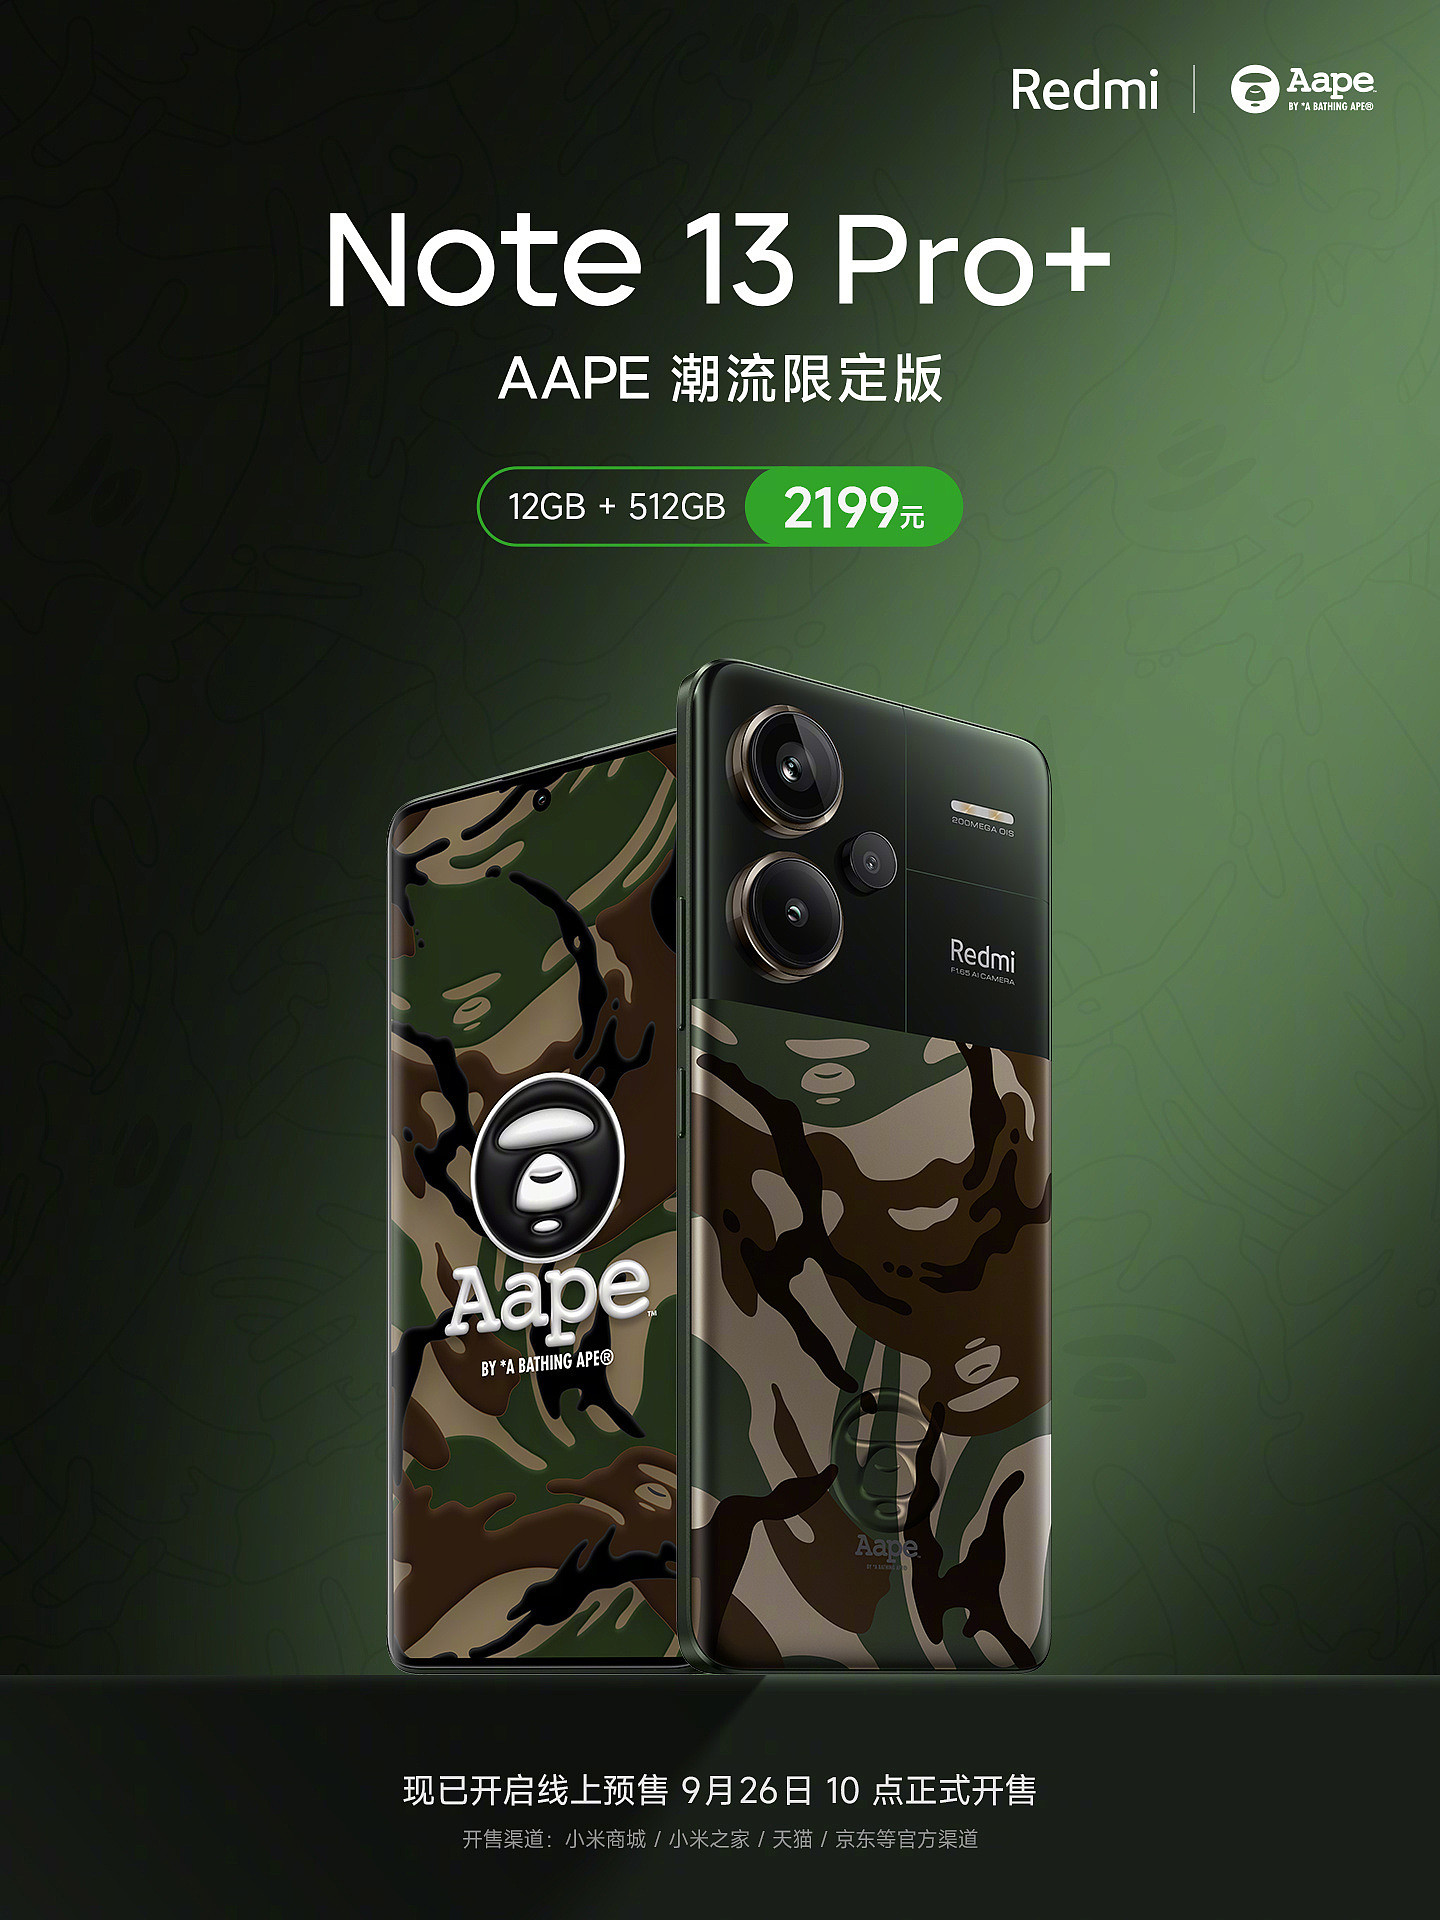 Redmi Note 13 Pro + AAPE 潮流限定版发布：绿色迷彩设计，售价 2199 元 - 1